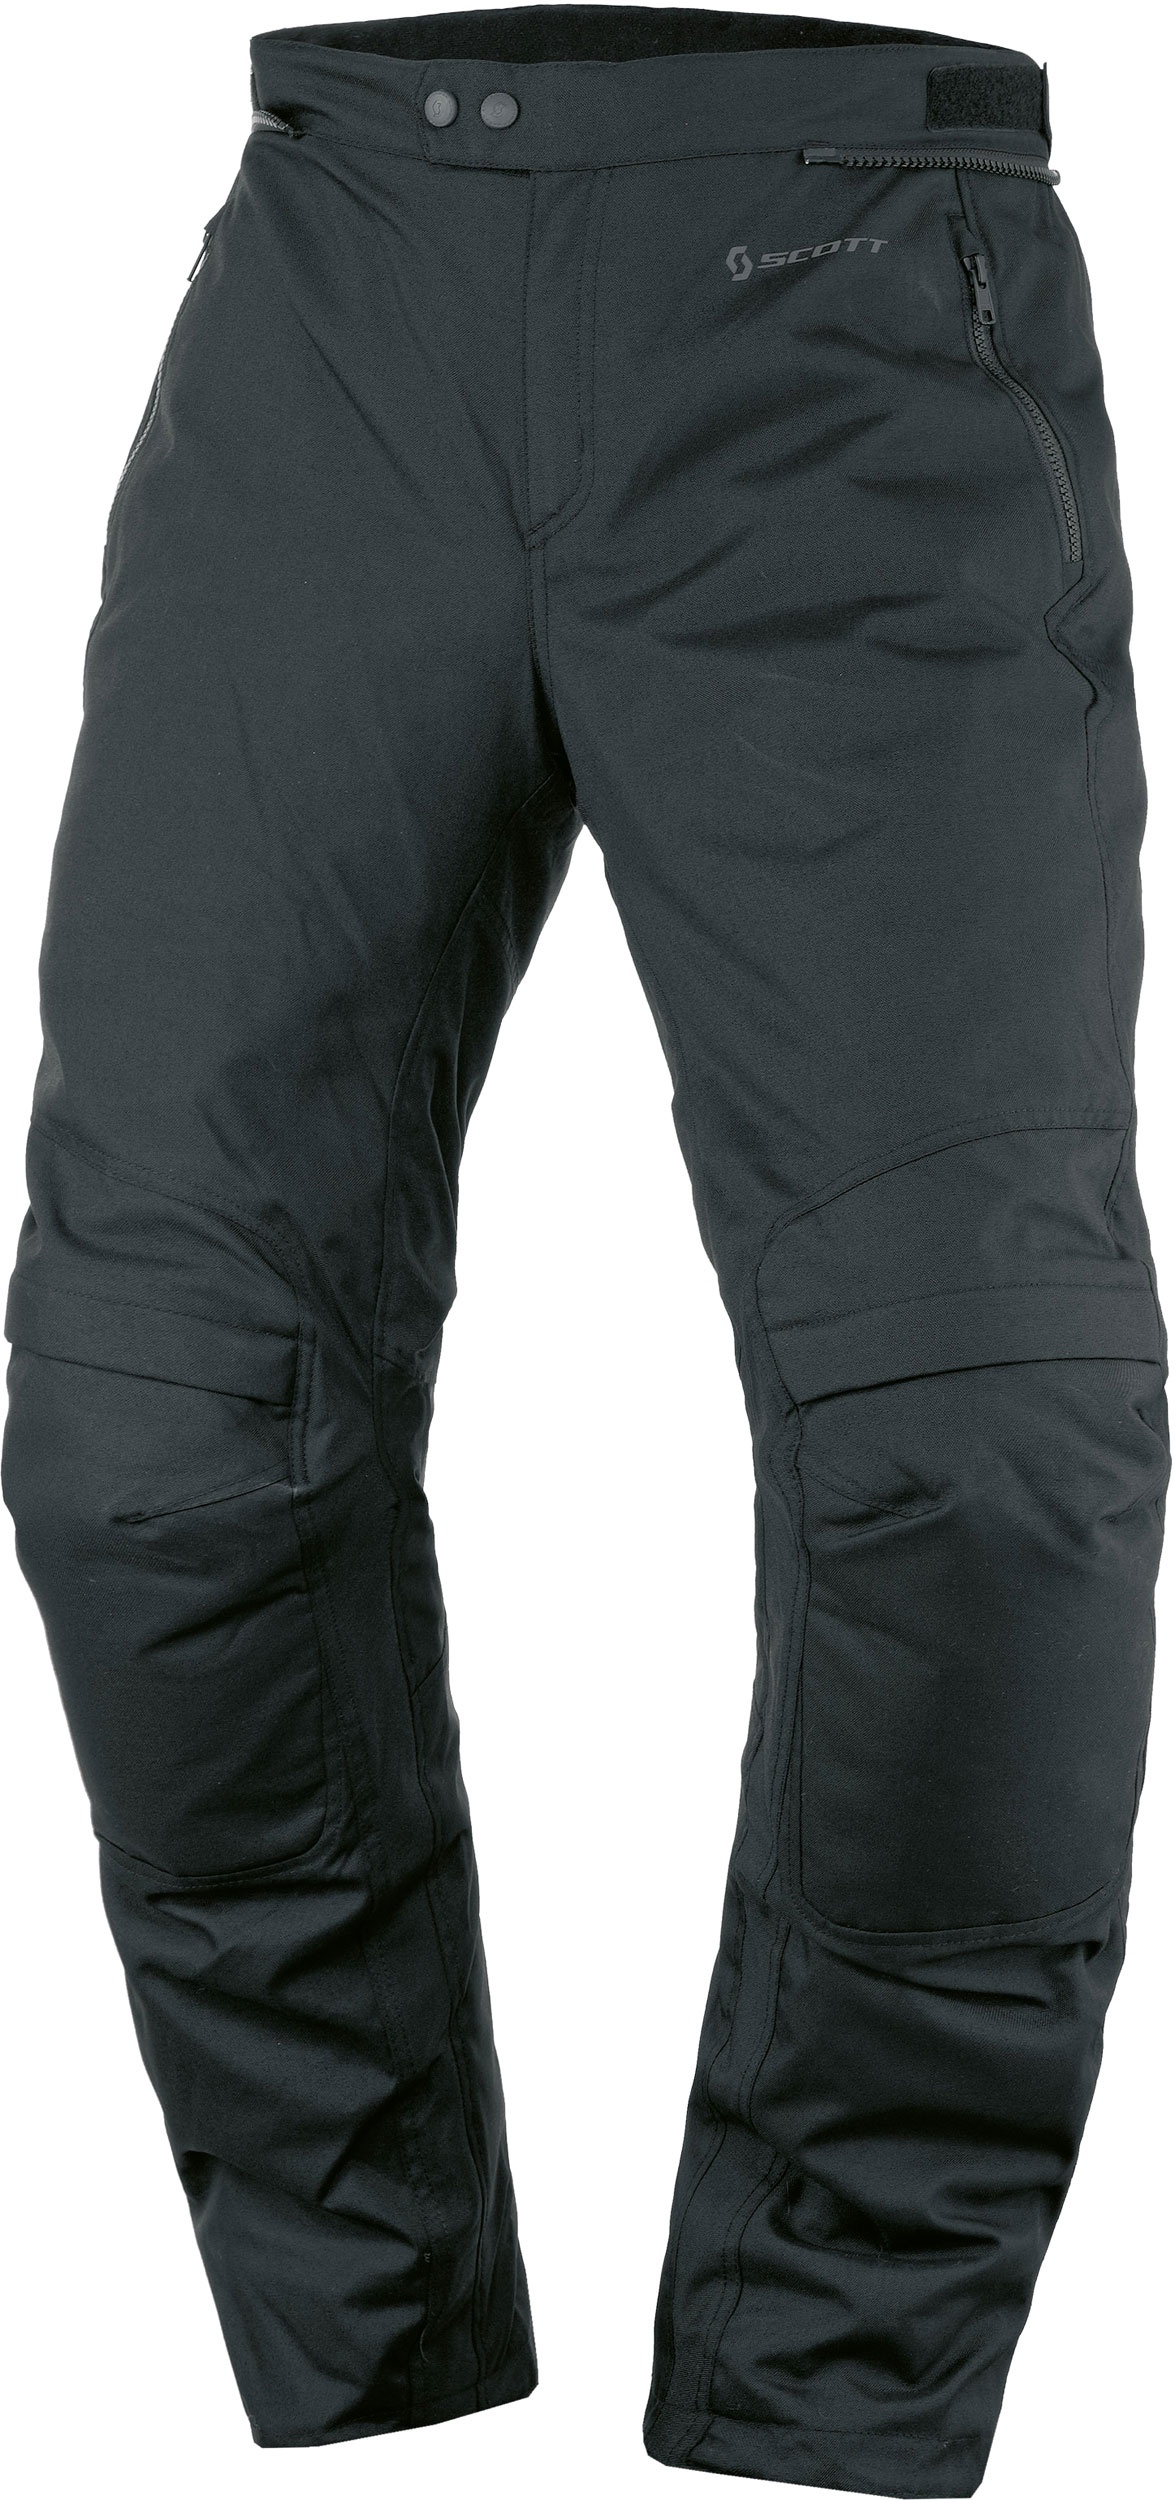 Scott Turn ADV DP, pantalons textile Dryosphere - Noir - XXL